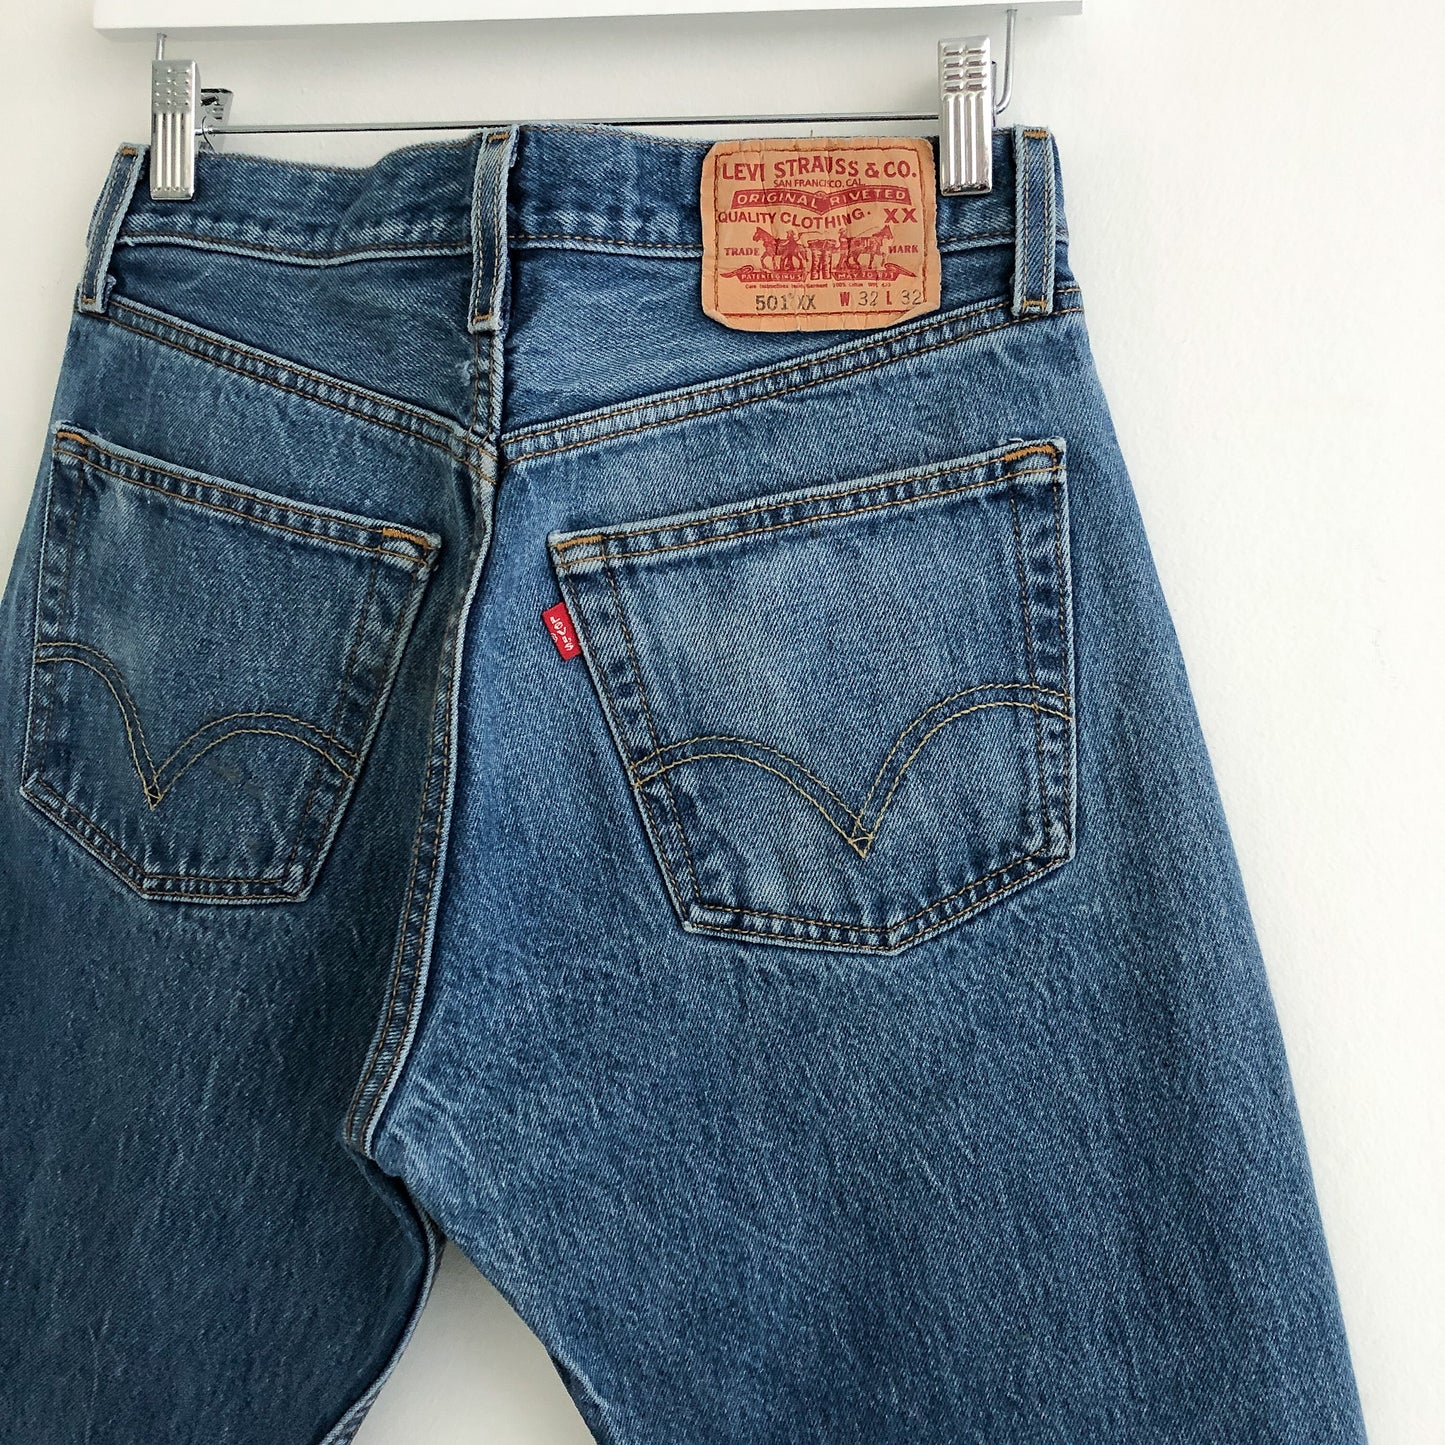 Vintage Levi’s 501s Cutoff Jeans